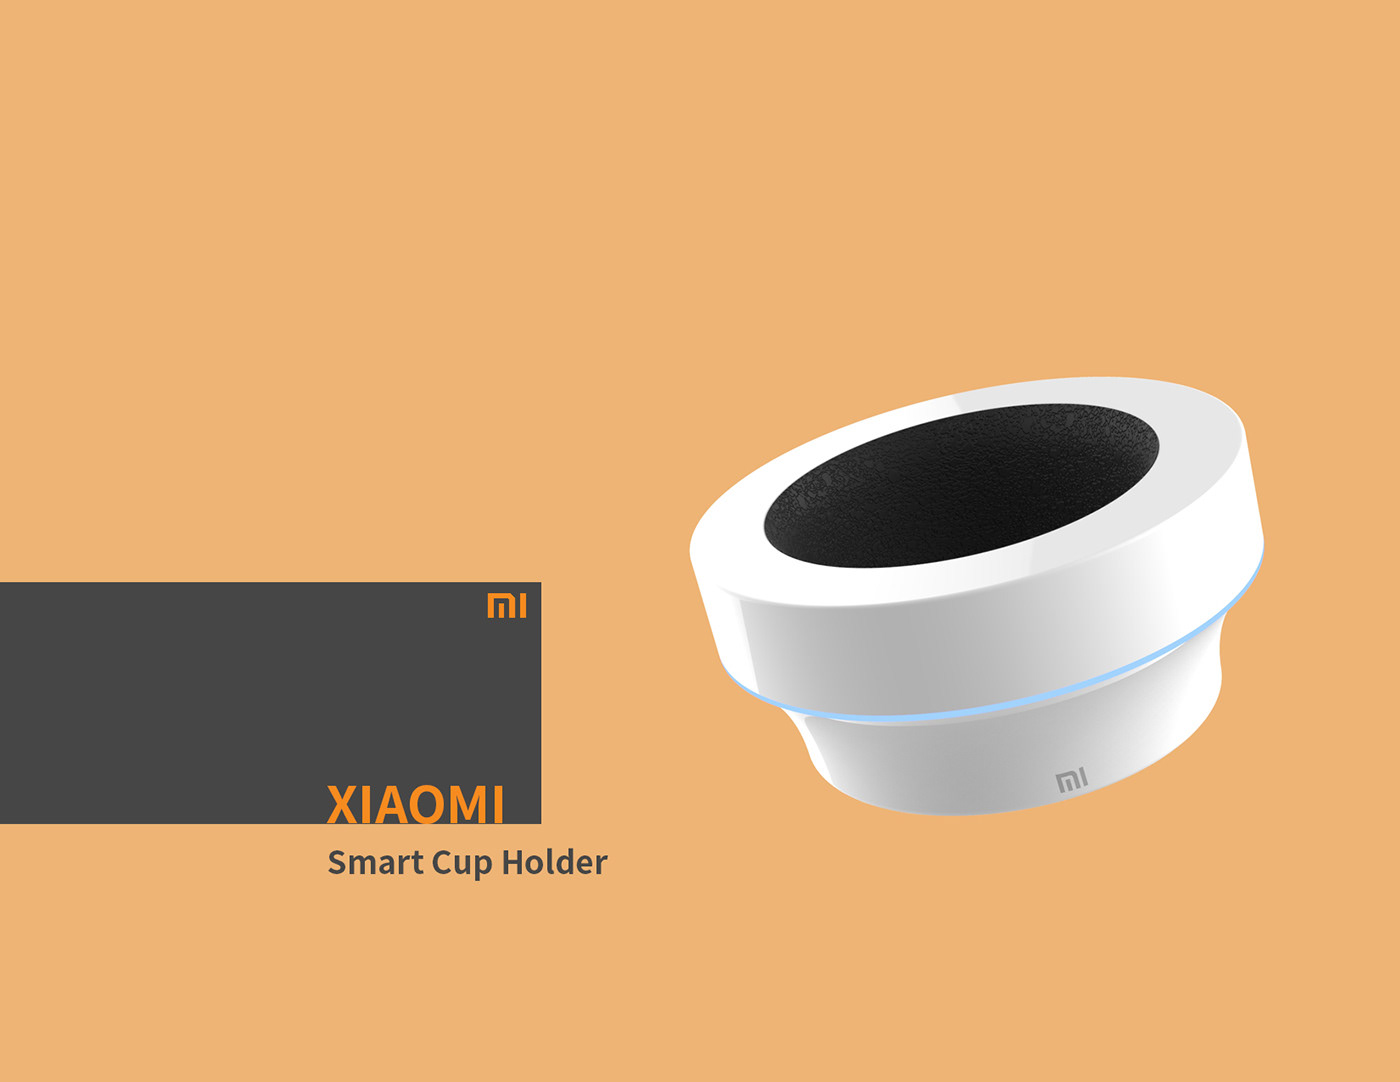 industrial design  branding  Technology xiaomi keyshot RISDID product design  healthcare dp